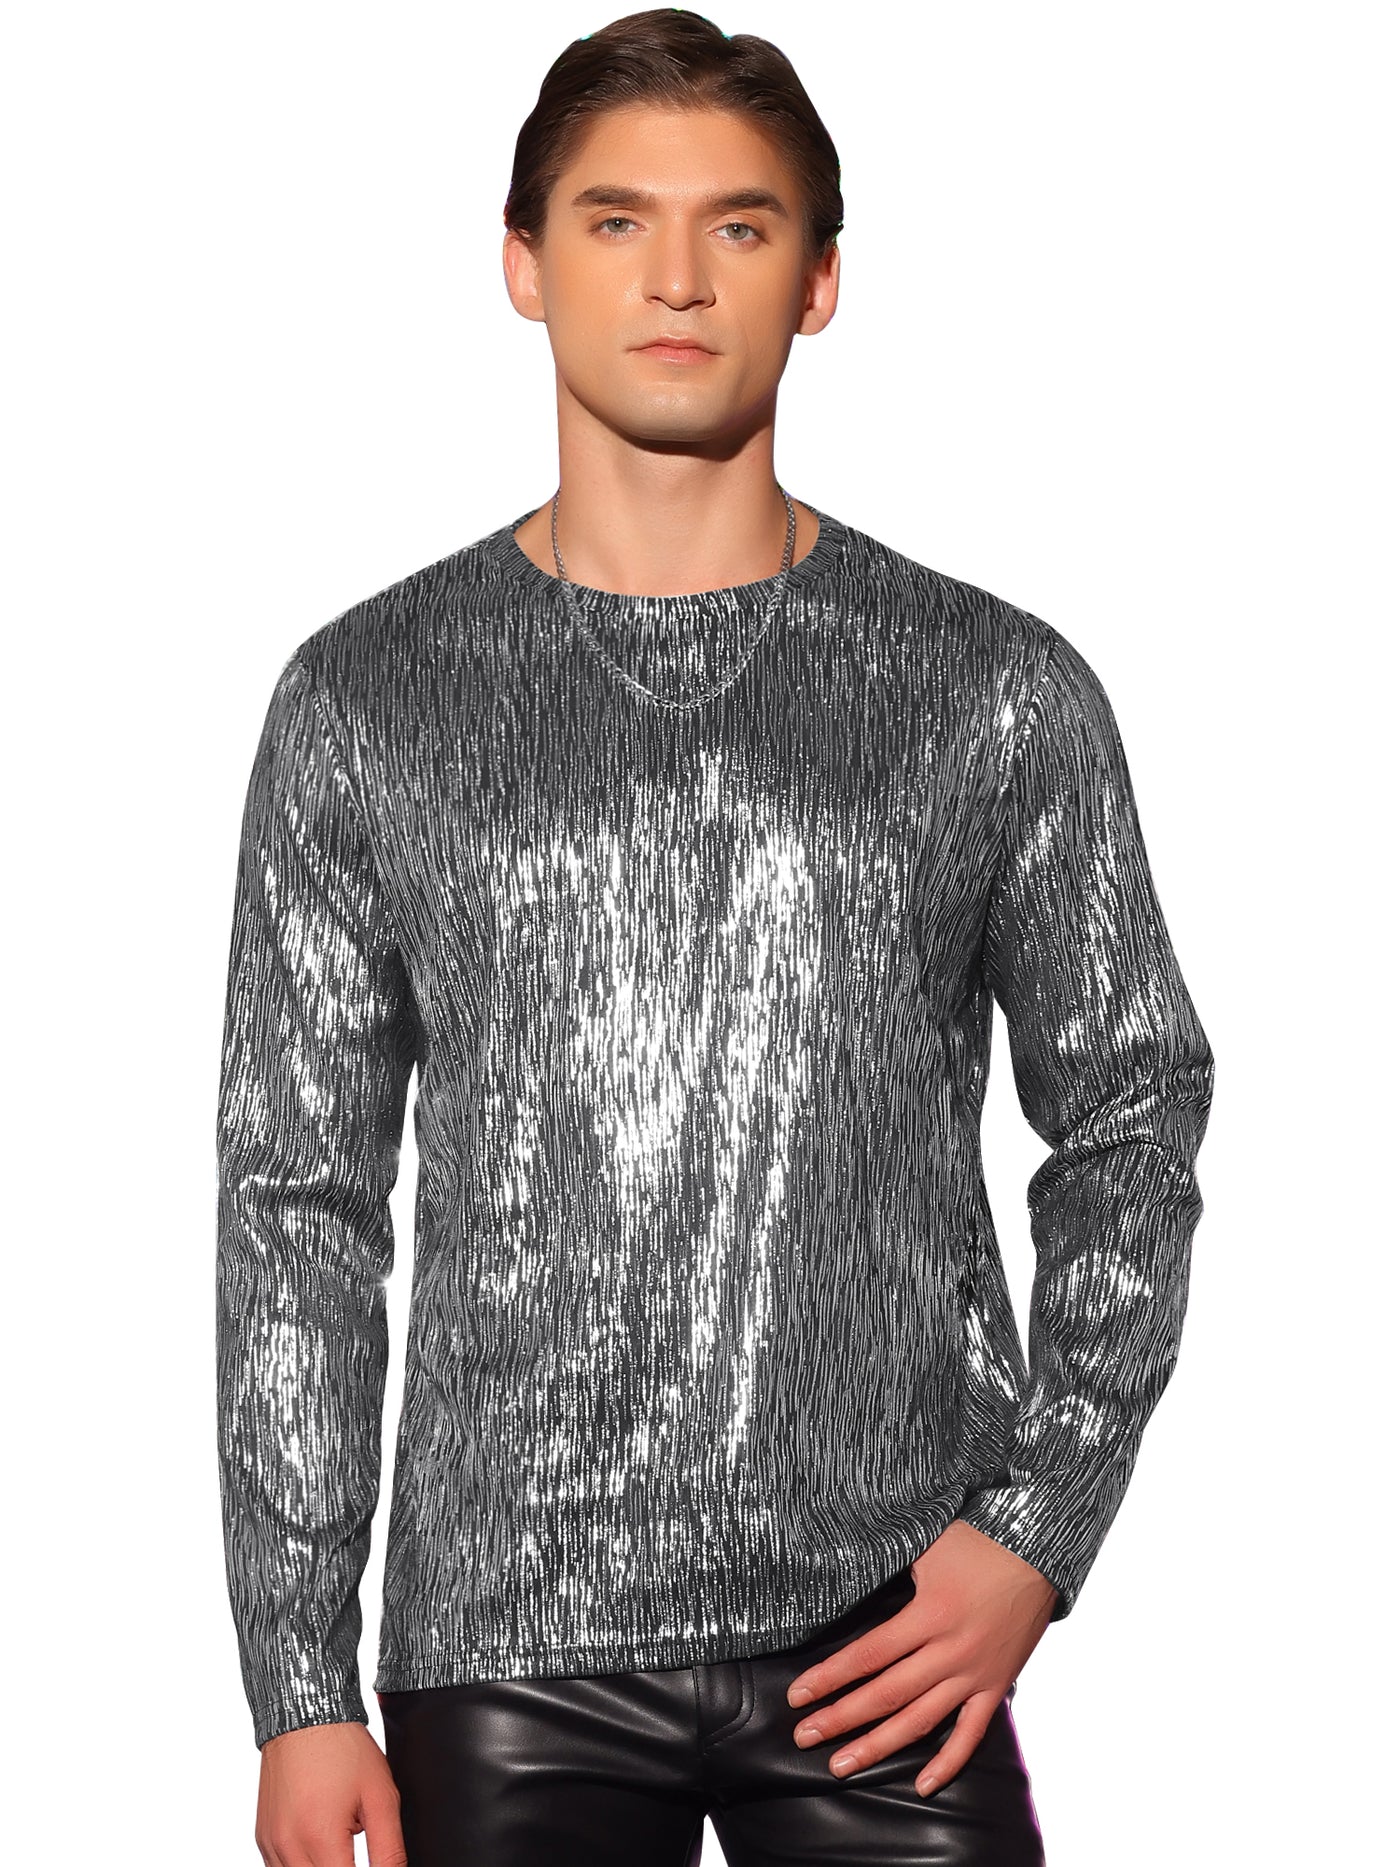 Bublédon Metallic Long Sleeves Top Party Clubwear Shiny T-Shirt Tee Shirt